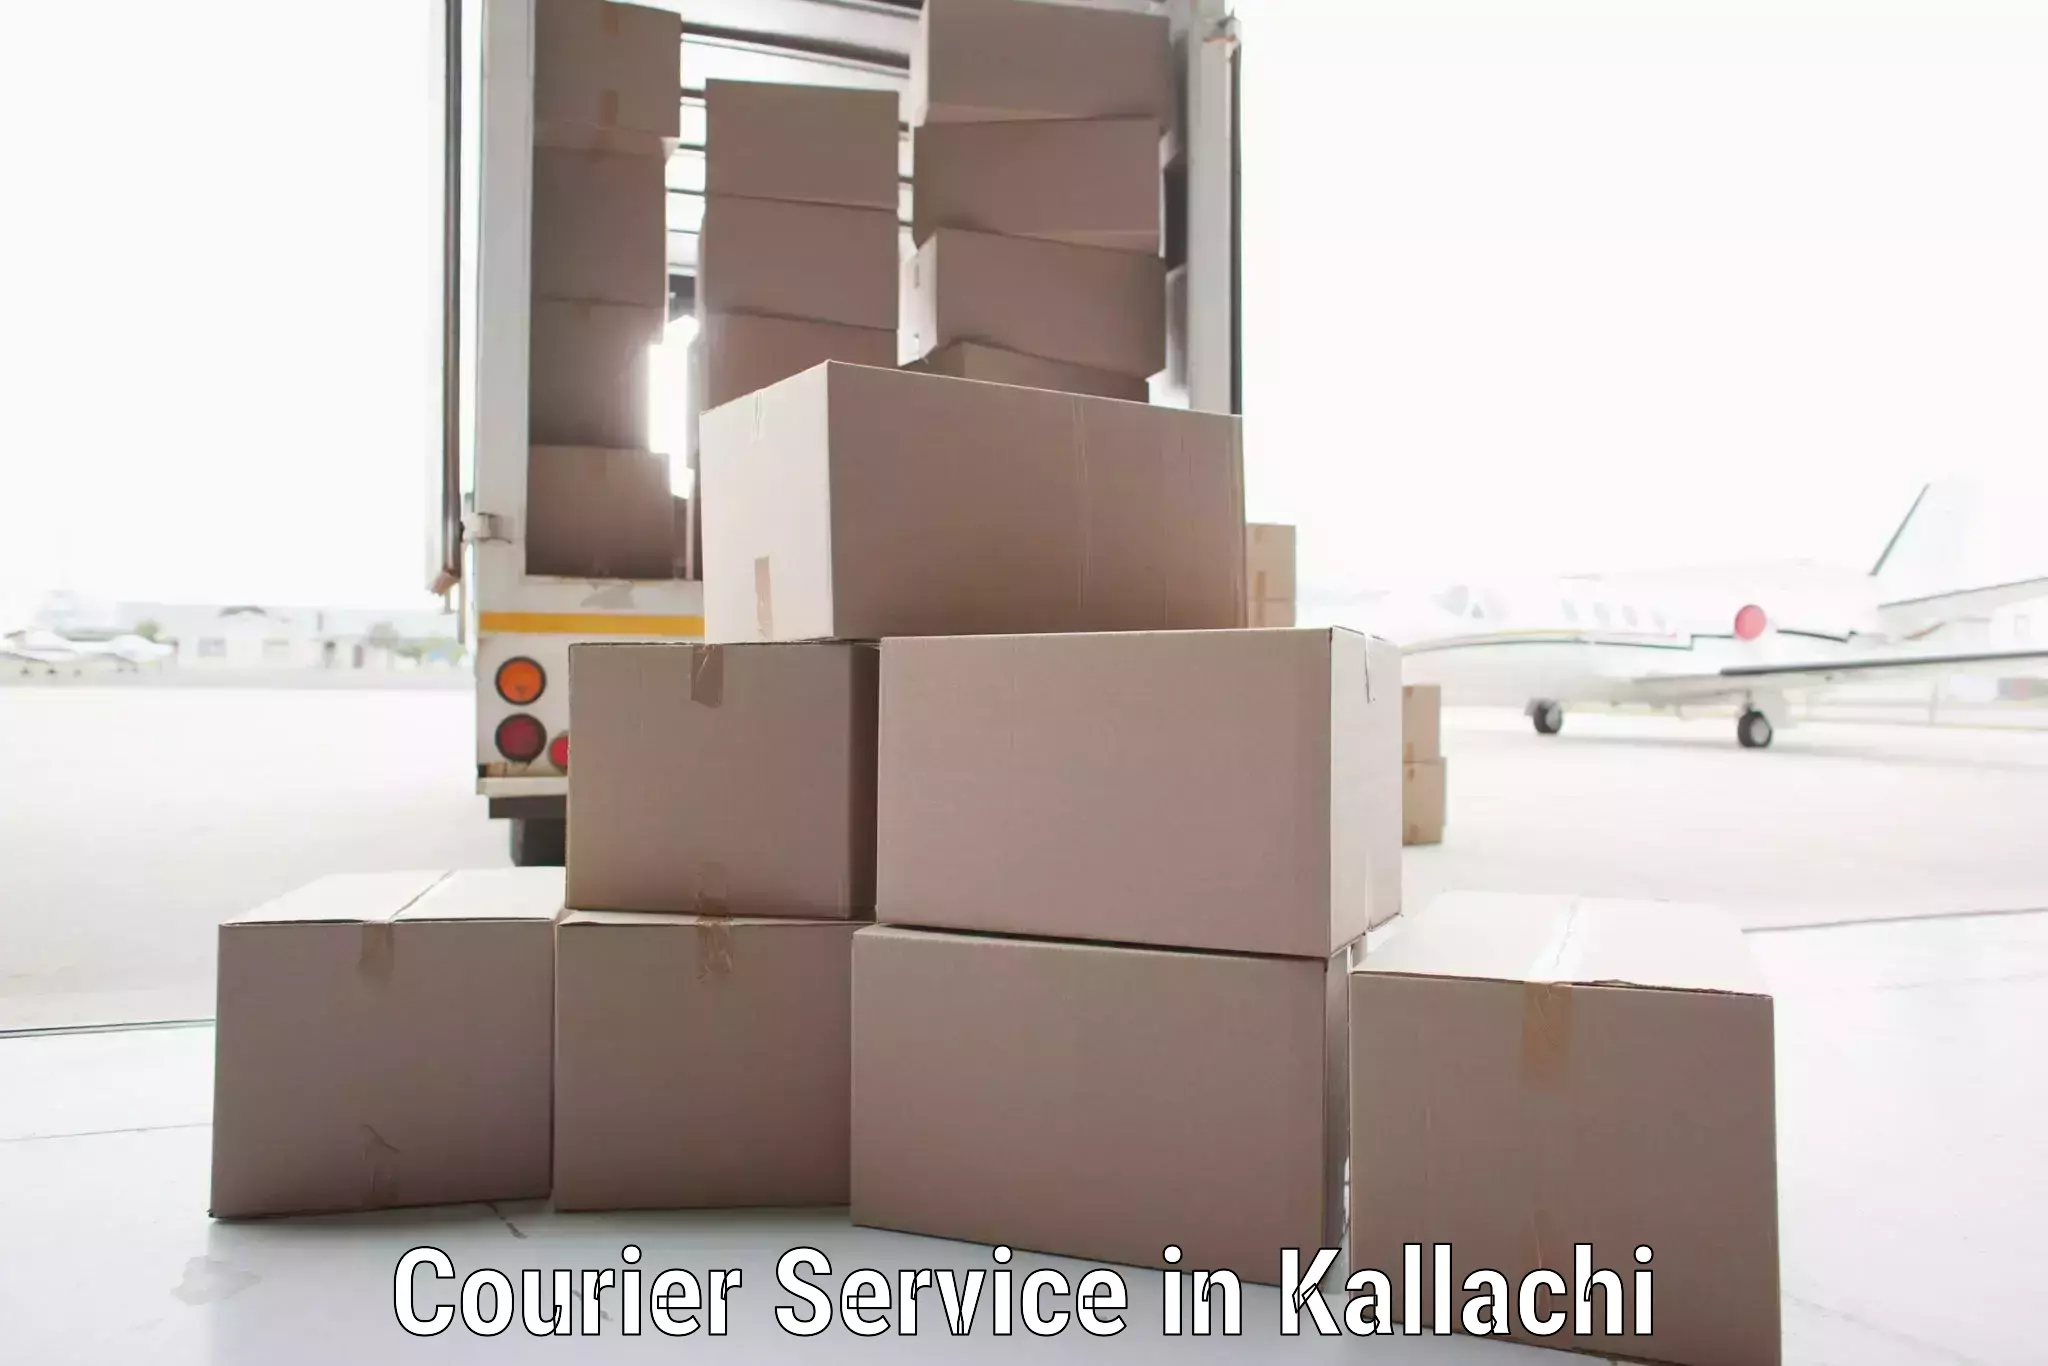 Specialized shipment handling in Kallachi